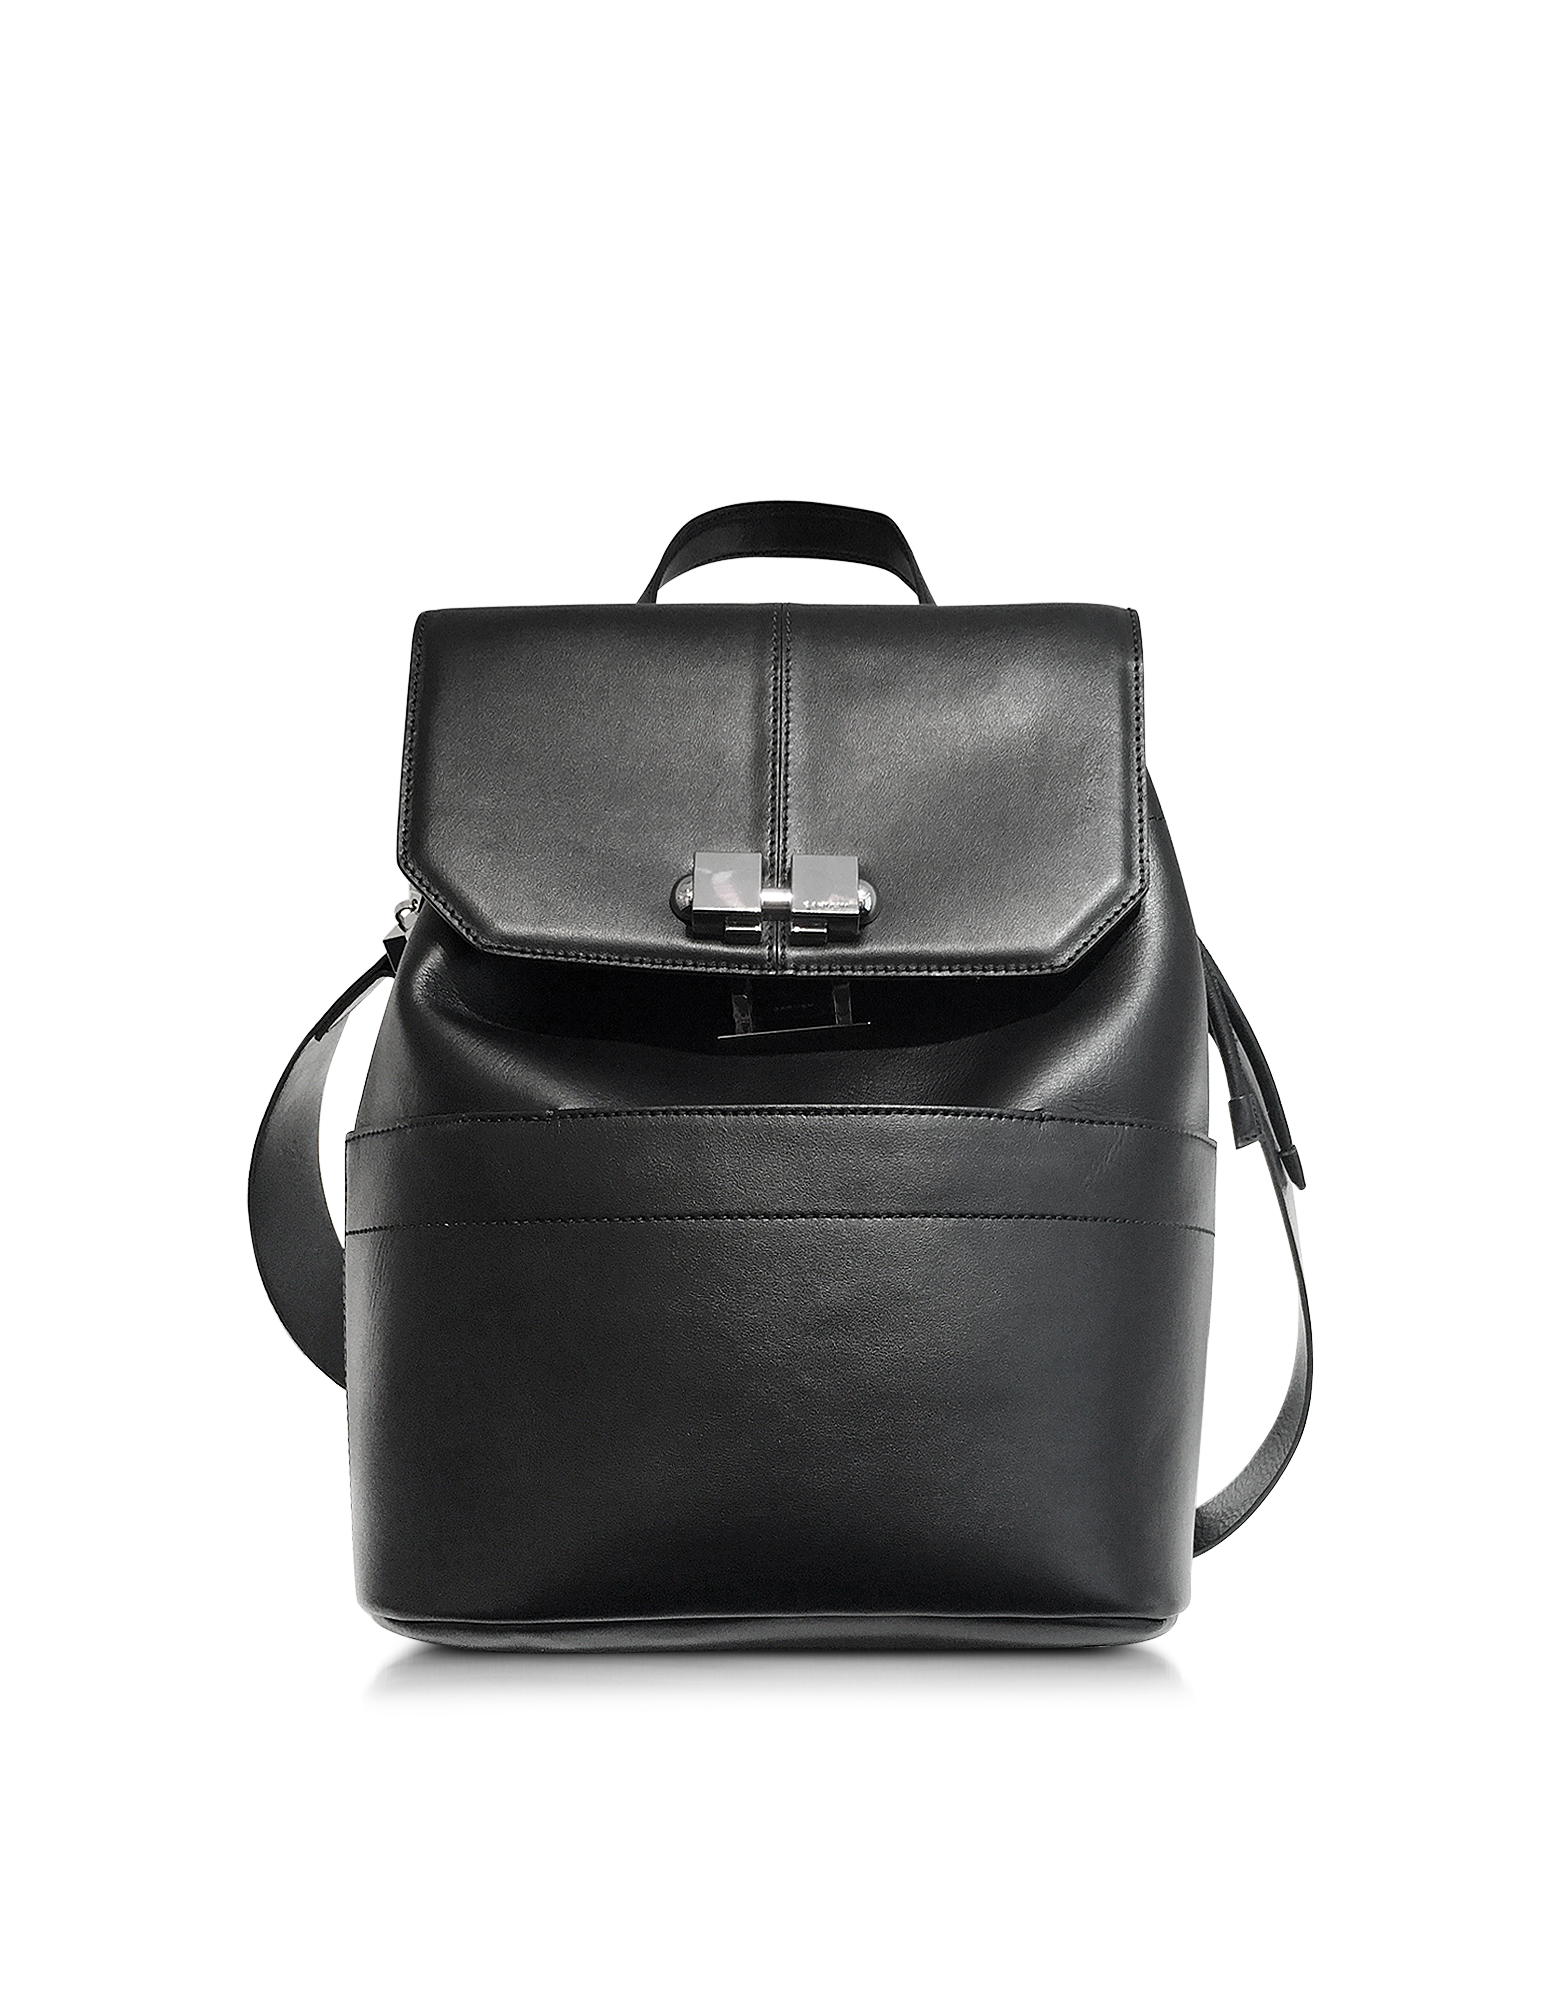 Designer Handbags 2016 - FORZIERI